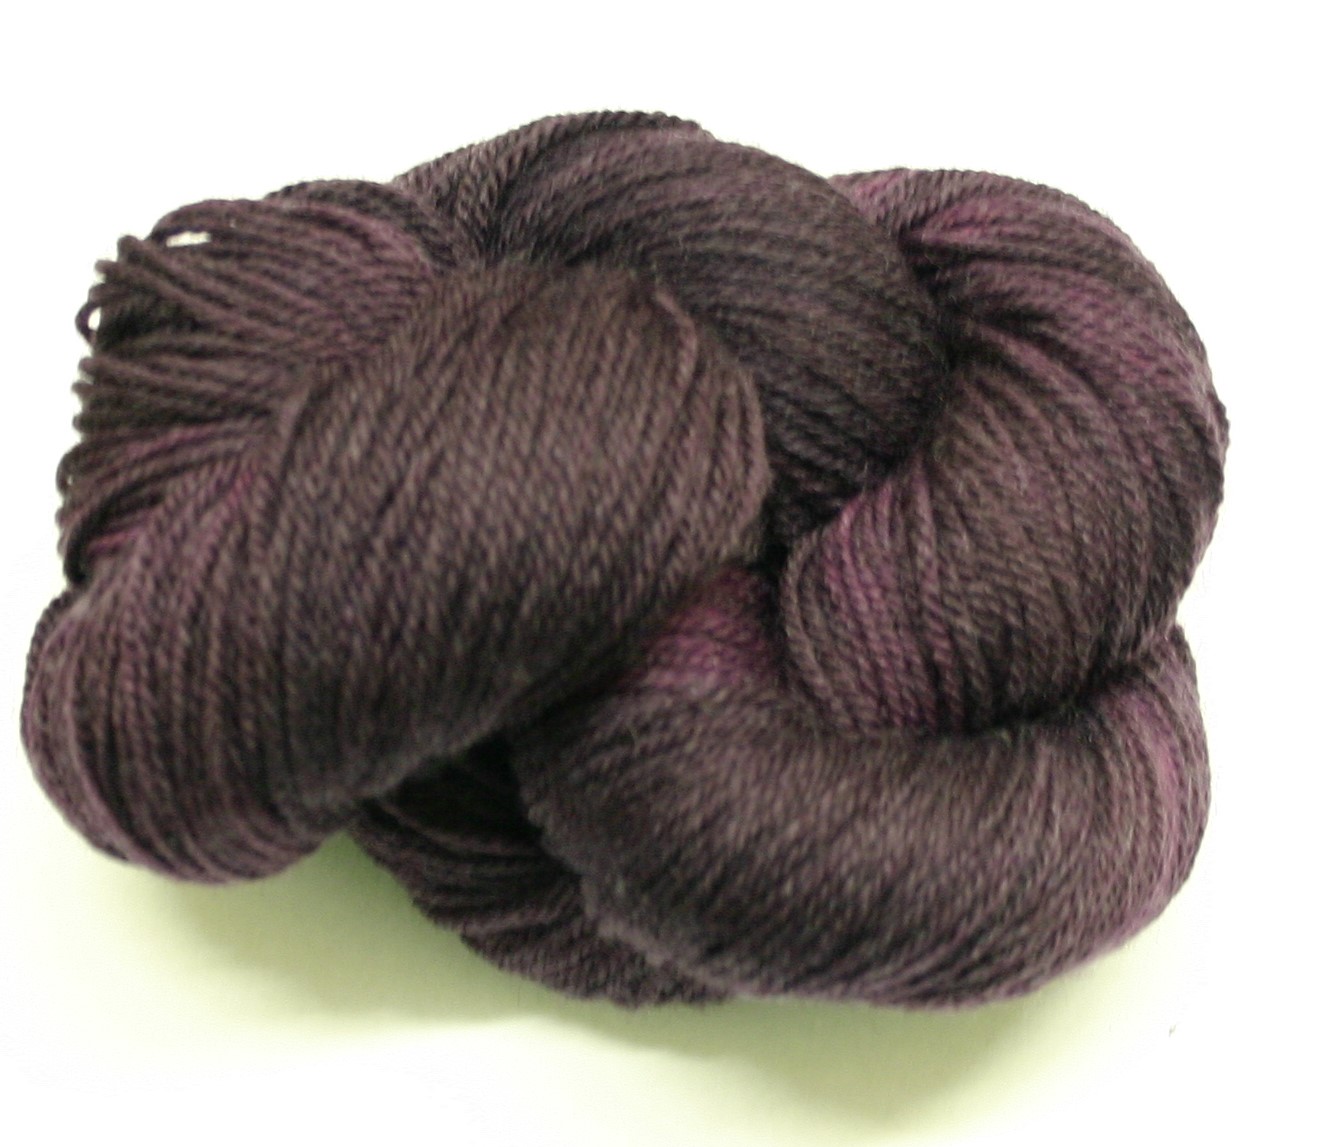 Ivy Brambles Enrapture Light Yarn - 131 Royal Purple